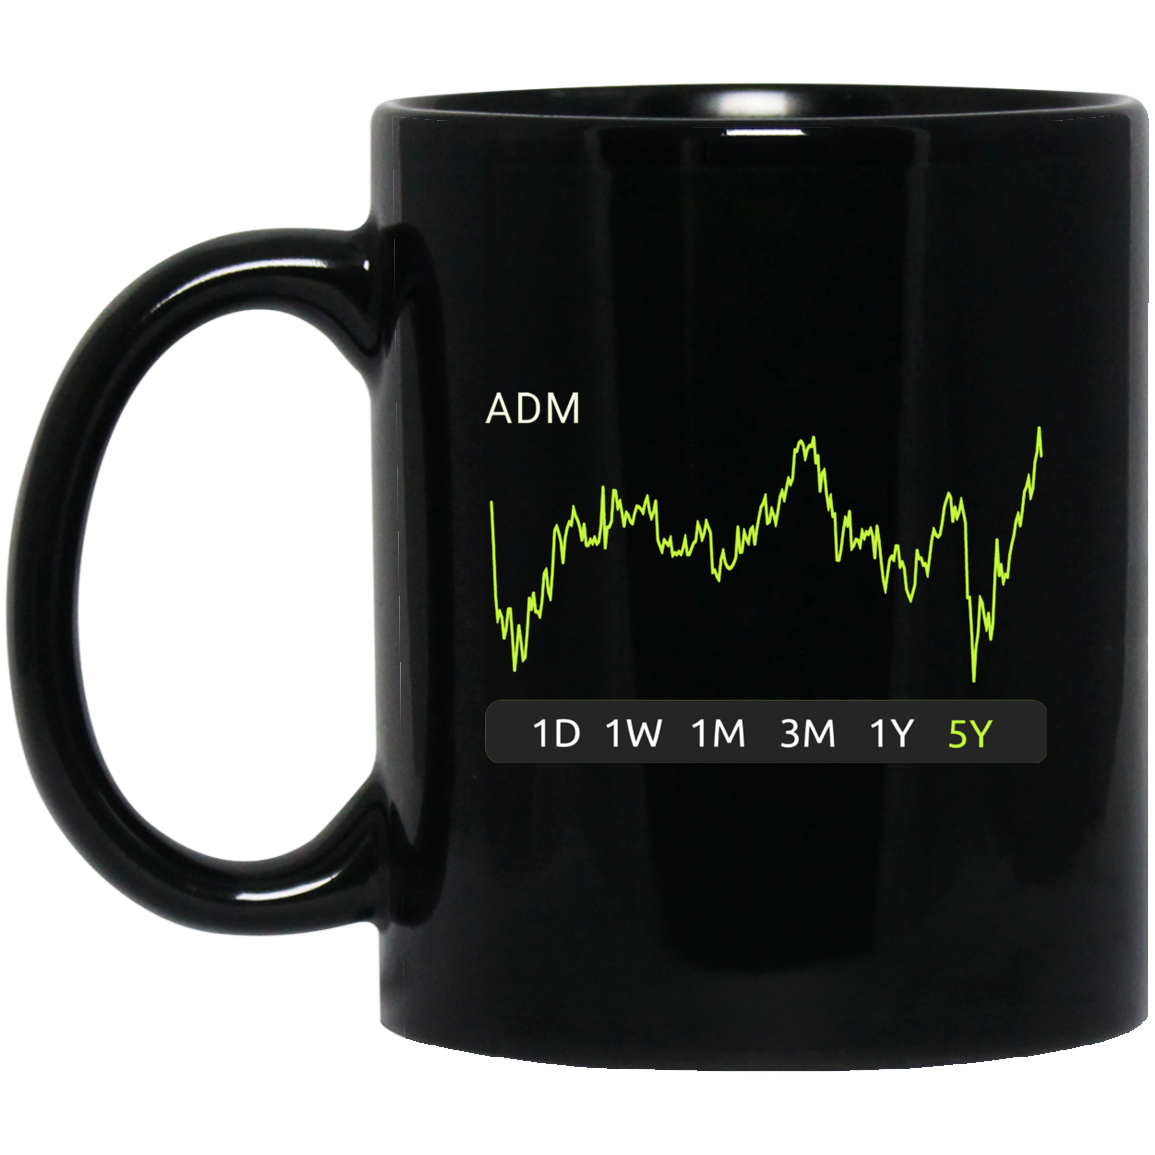 ADM Stock 5y Mug